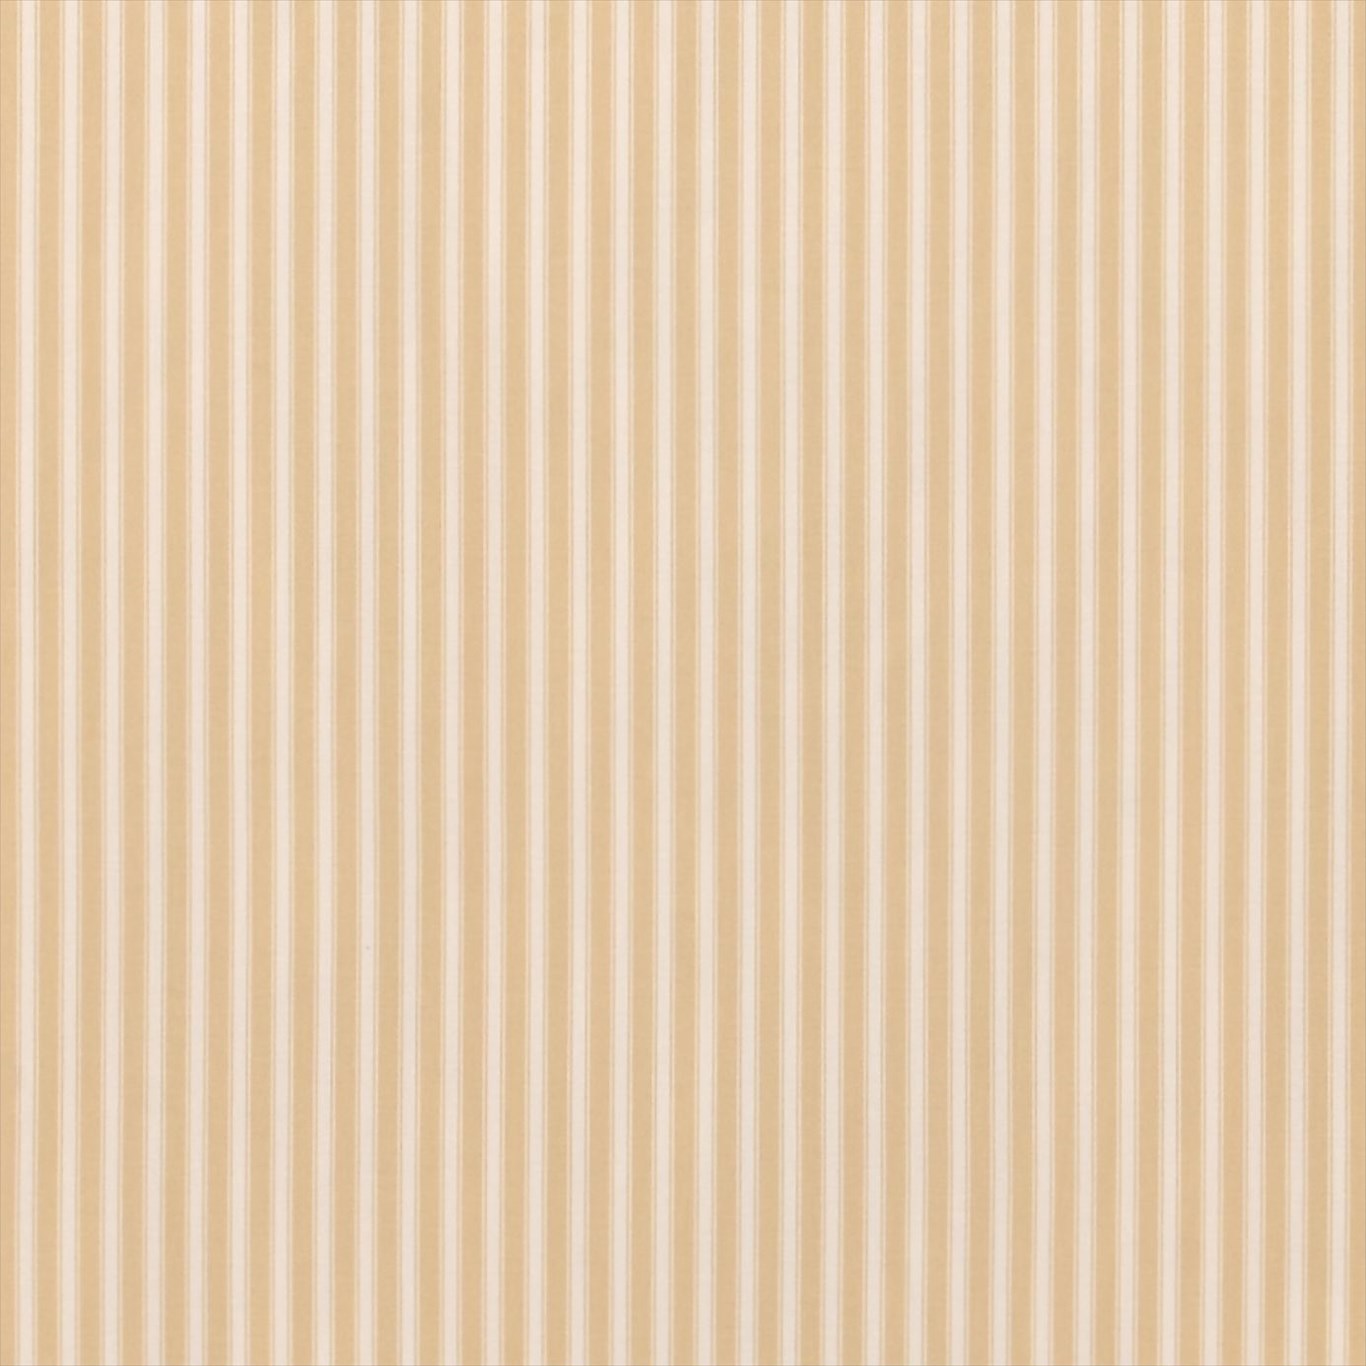 New Tiger Stripe Honey/Cream Fabric by SAN